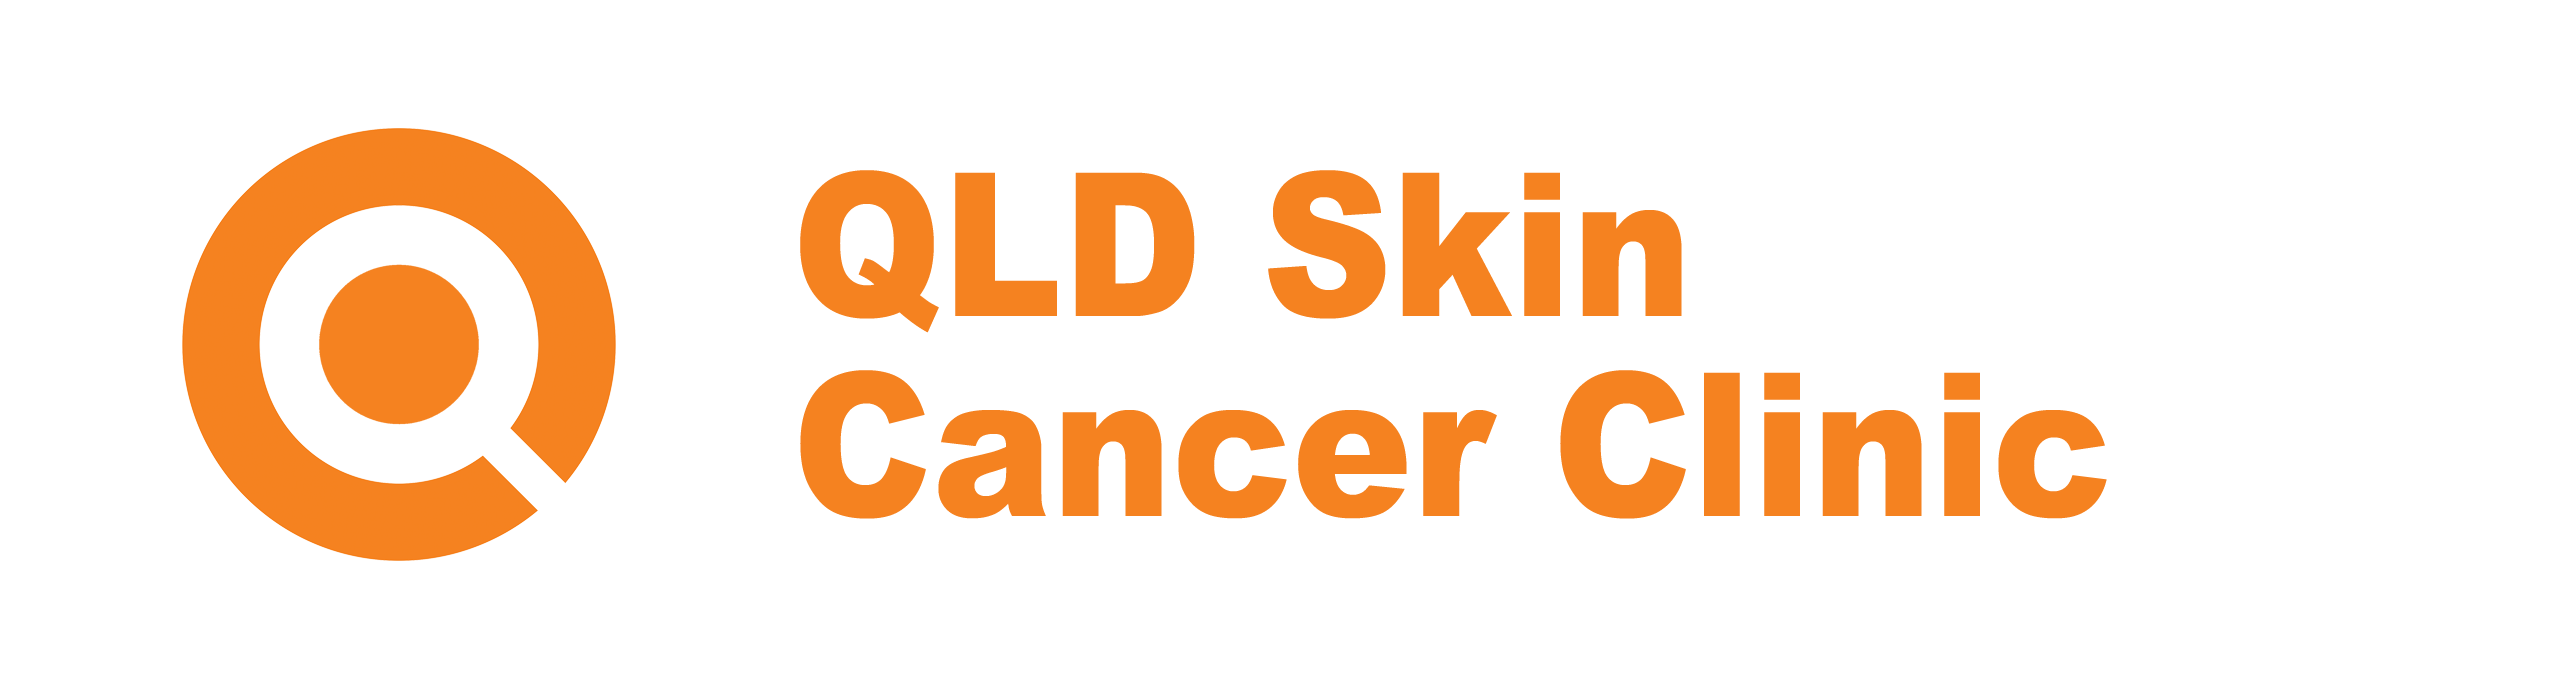 queensland skin cancer clinic logo